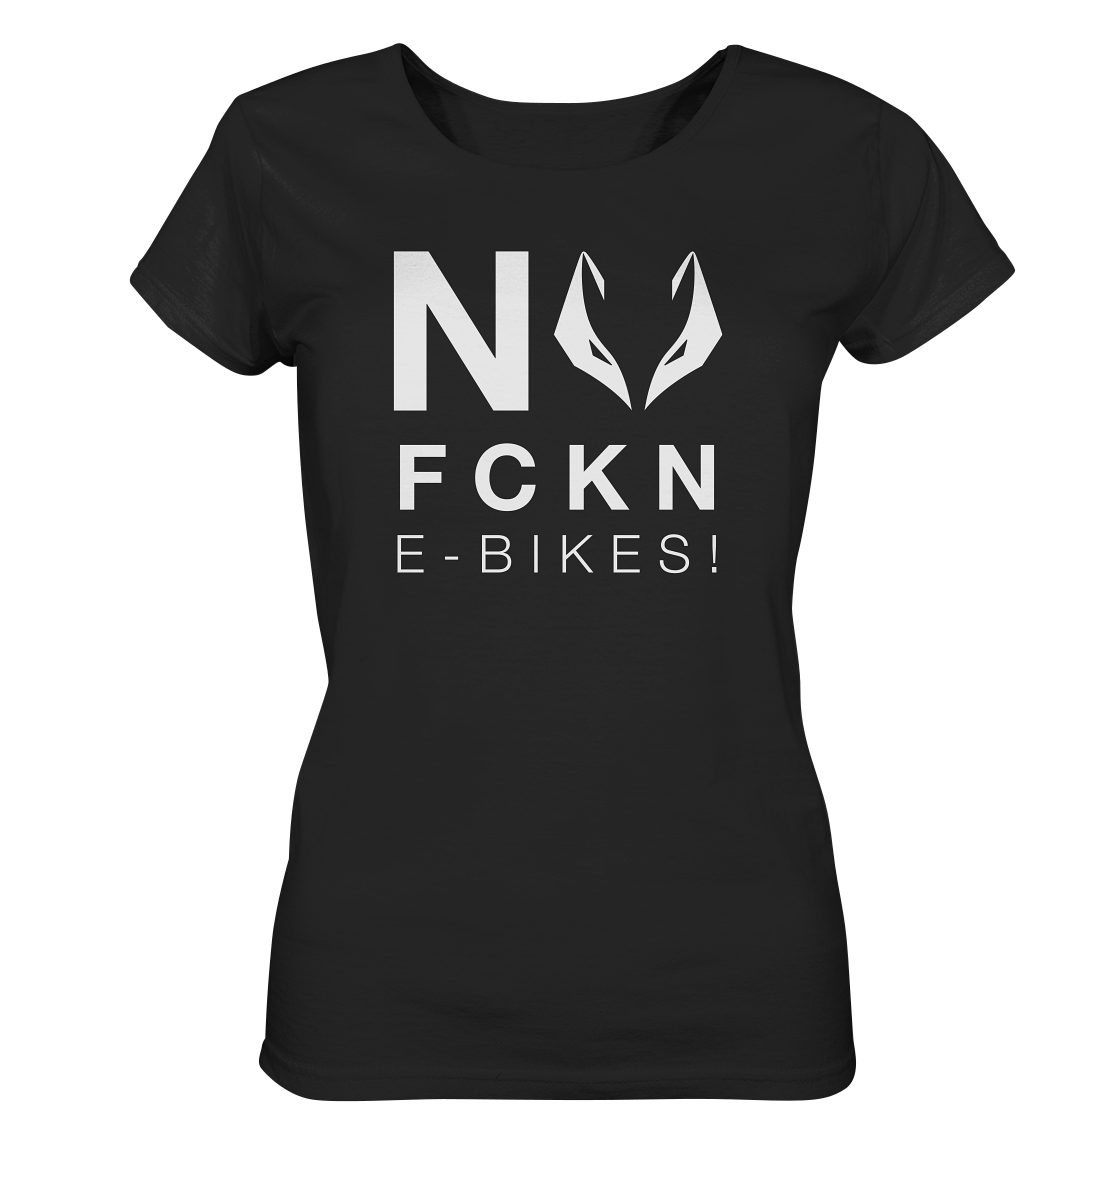 NO FCKN E-BIKES - Ladies Organic Shirt